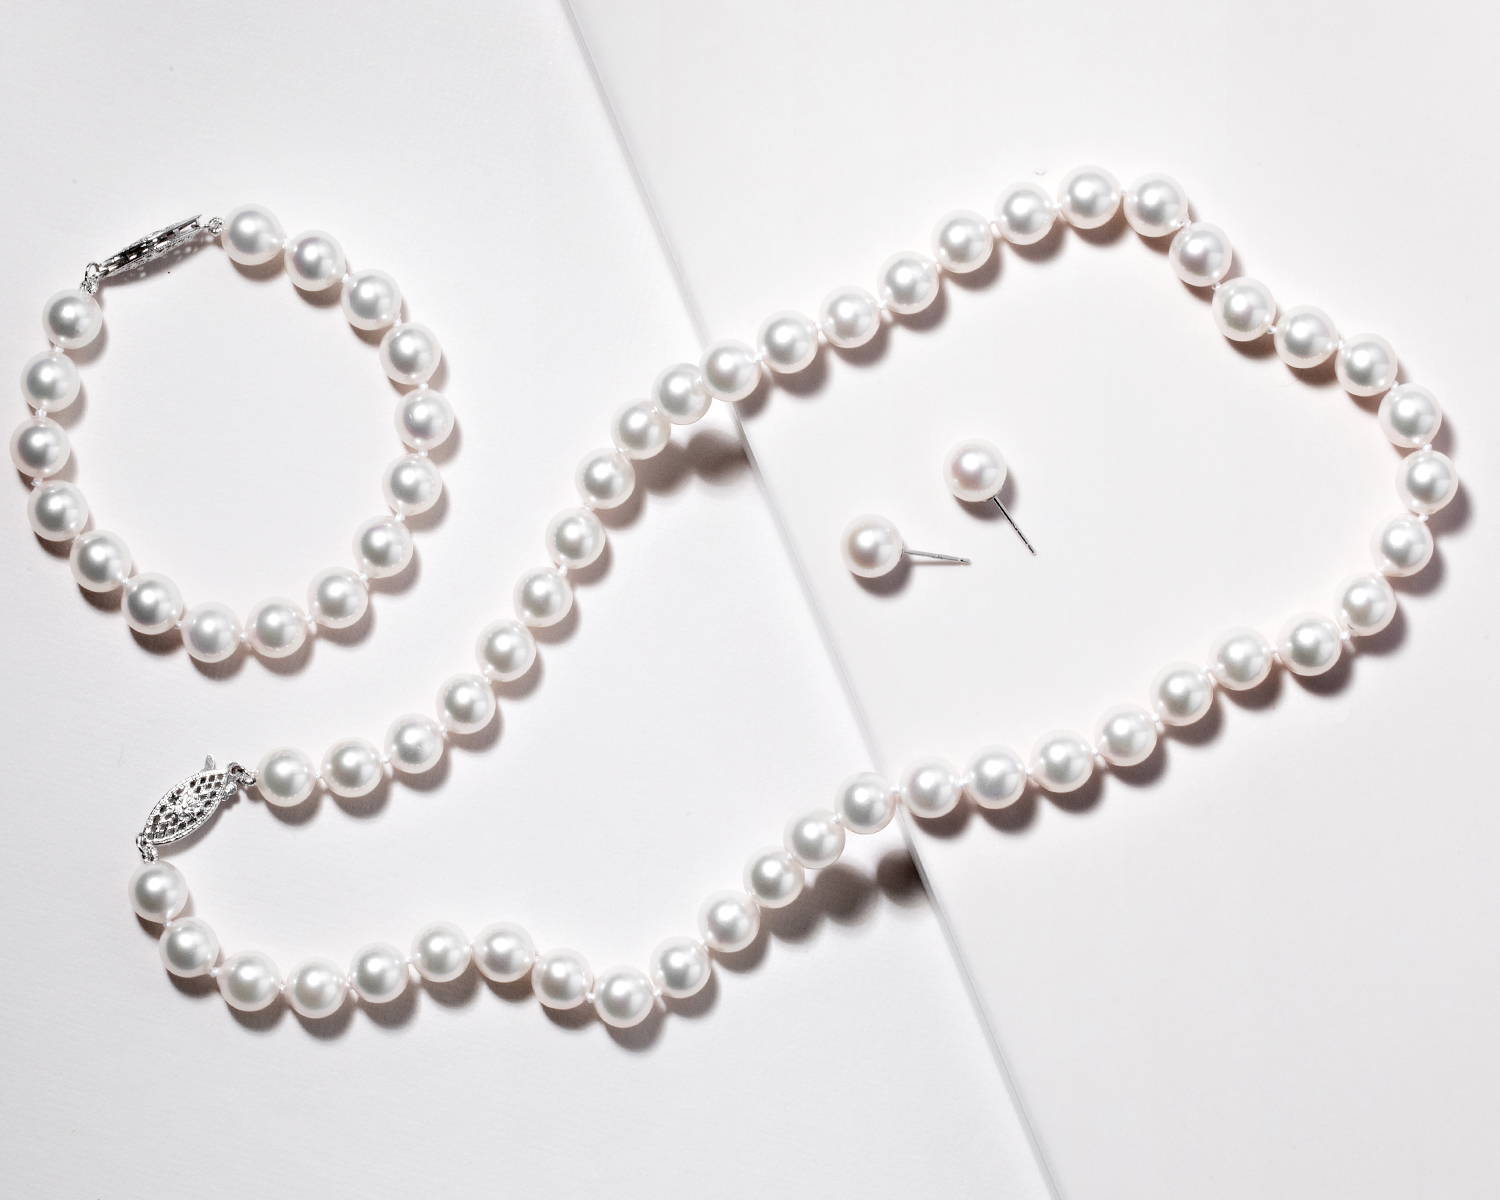 Gem Grade White Freshwater Pearl Necklace Bracelet and Earring Set